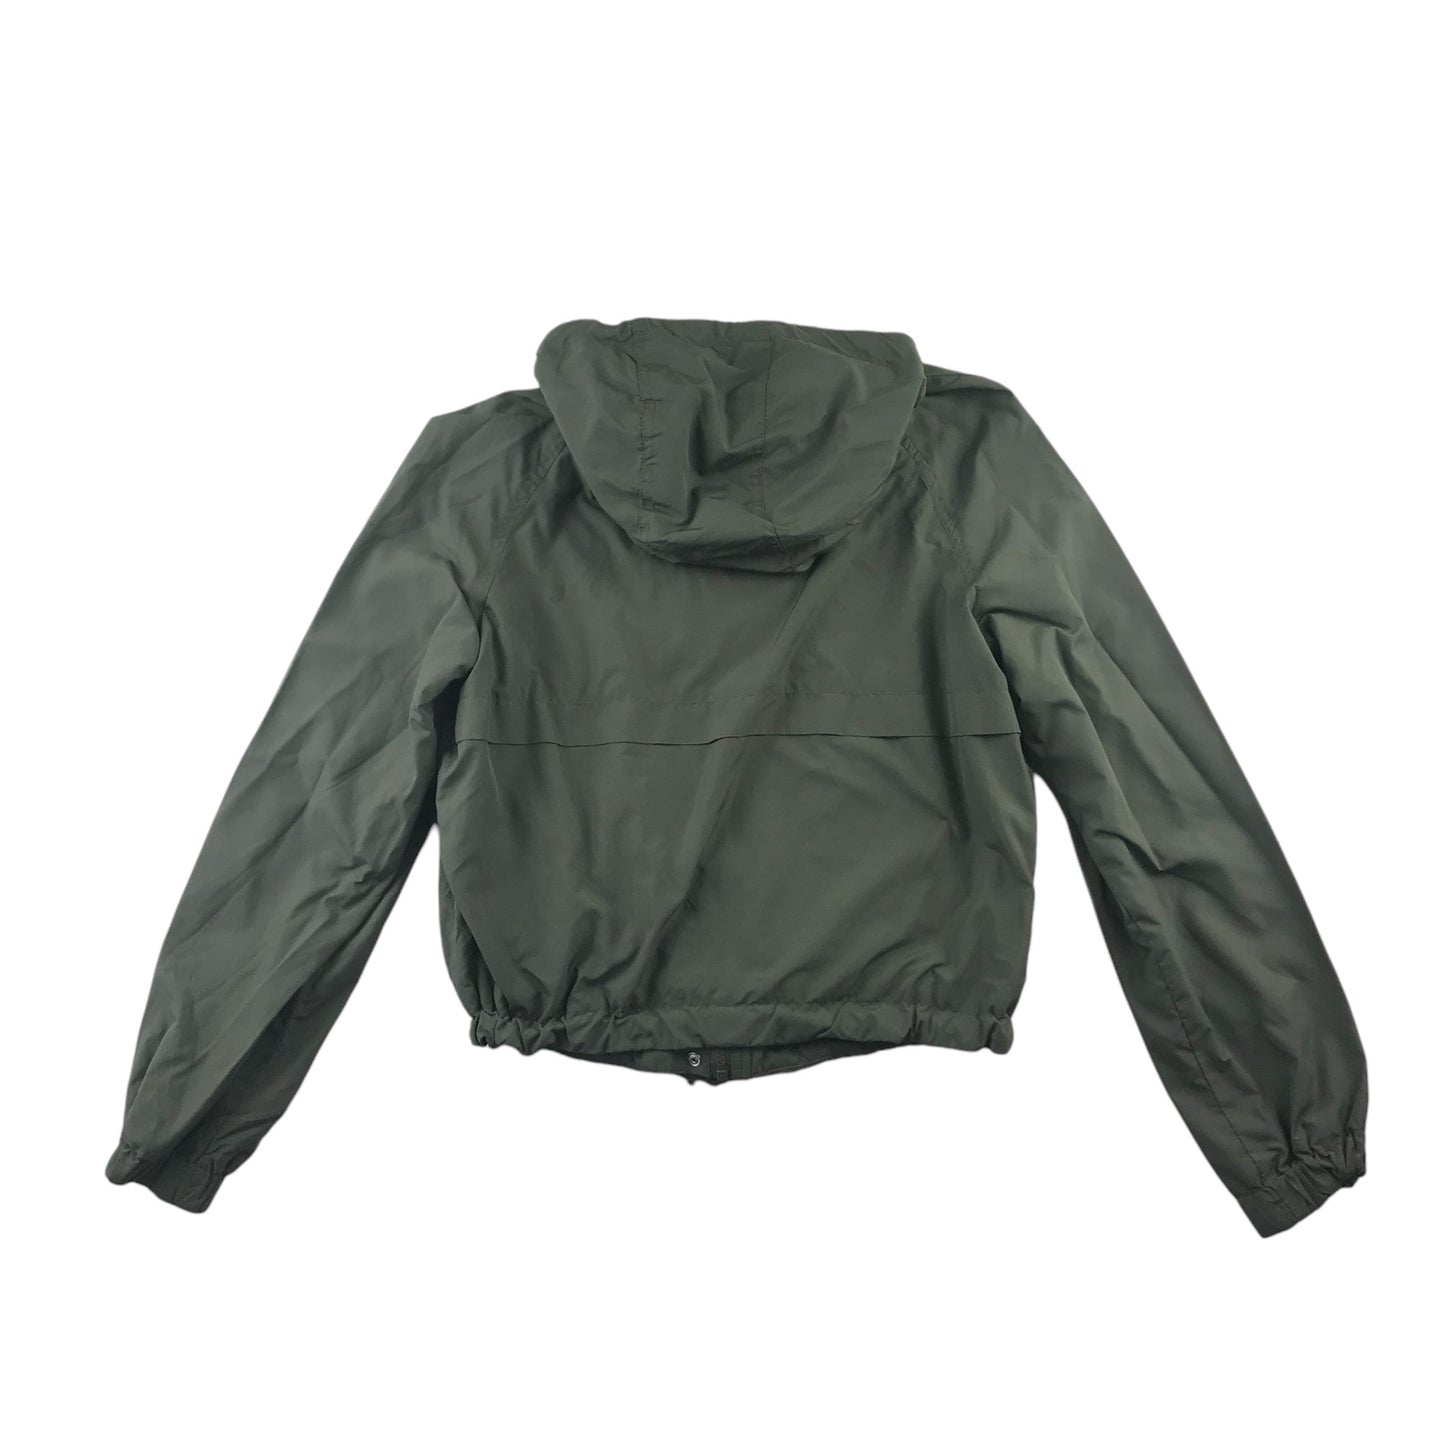 H&M light jacket women's size EUR 32 khaki green cropped over sized